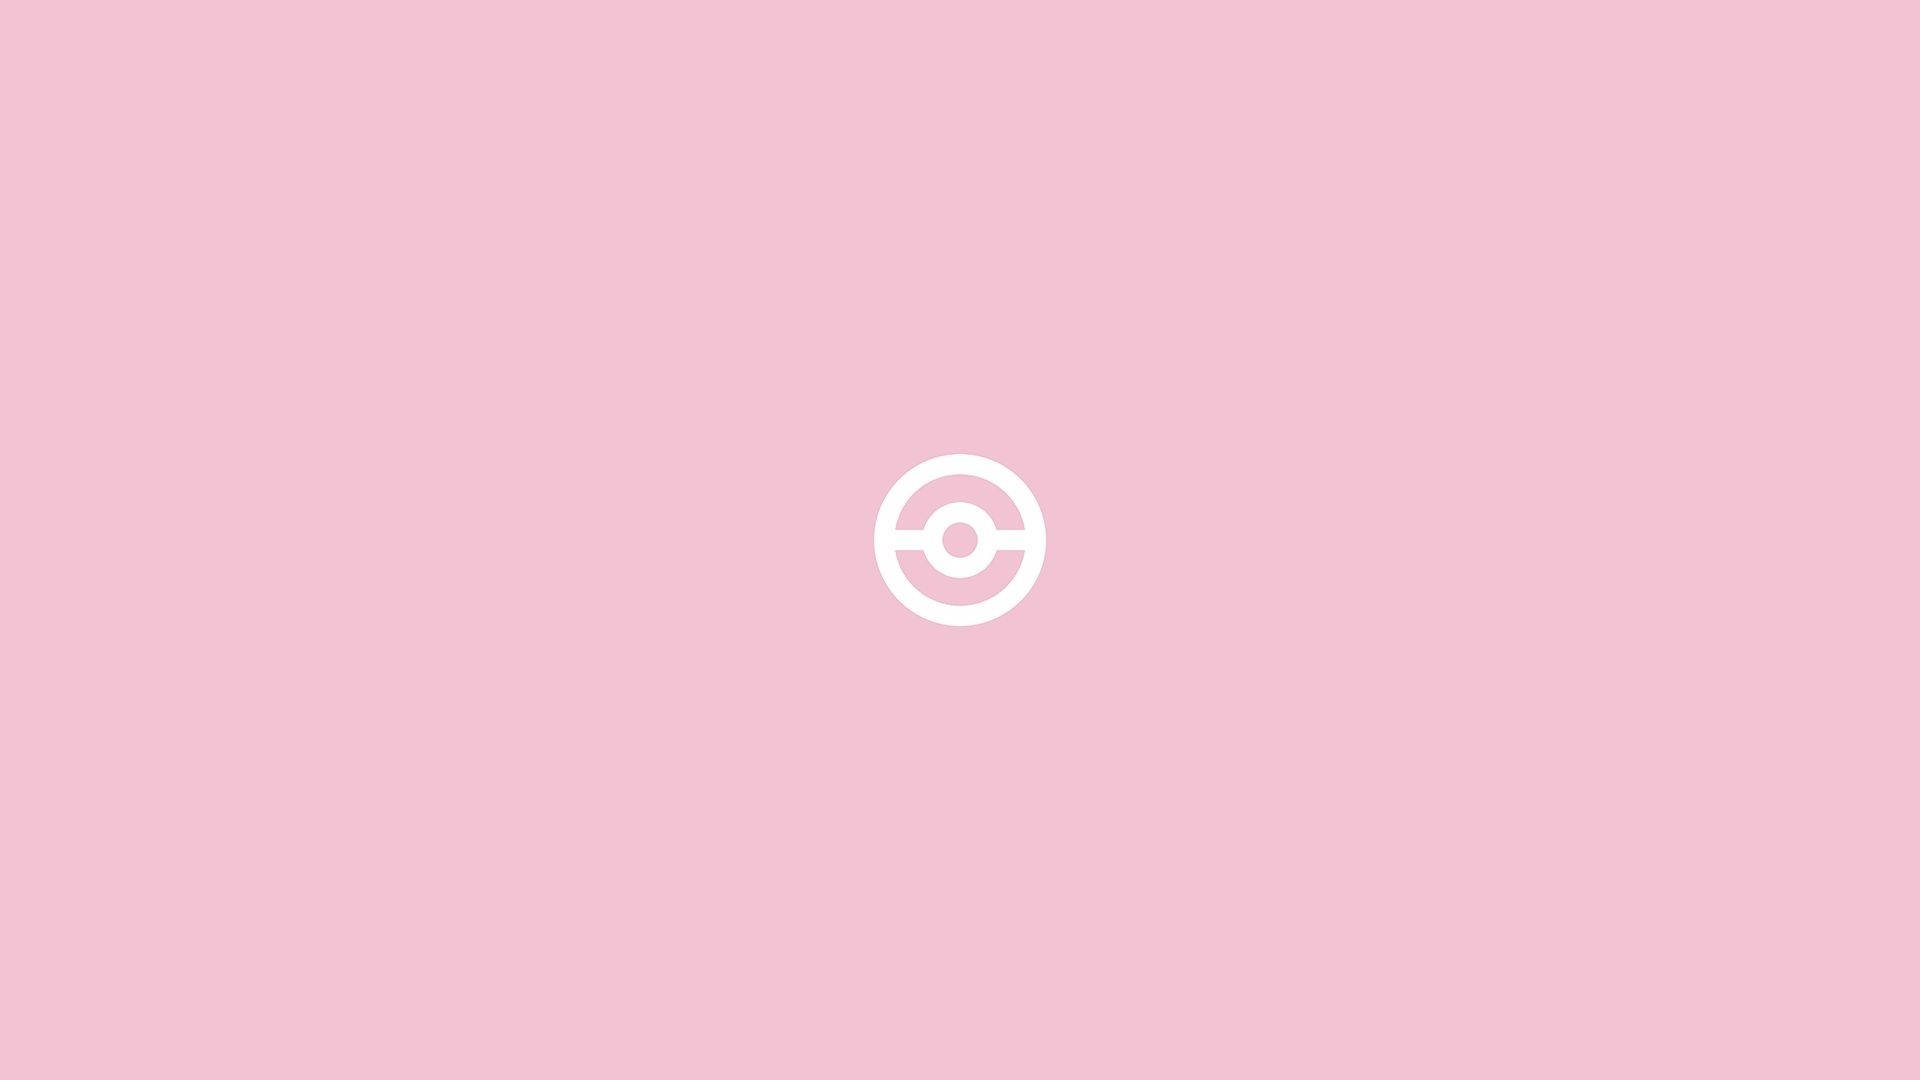 Cute Simple Pokemon Symbol Wallpaper